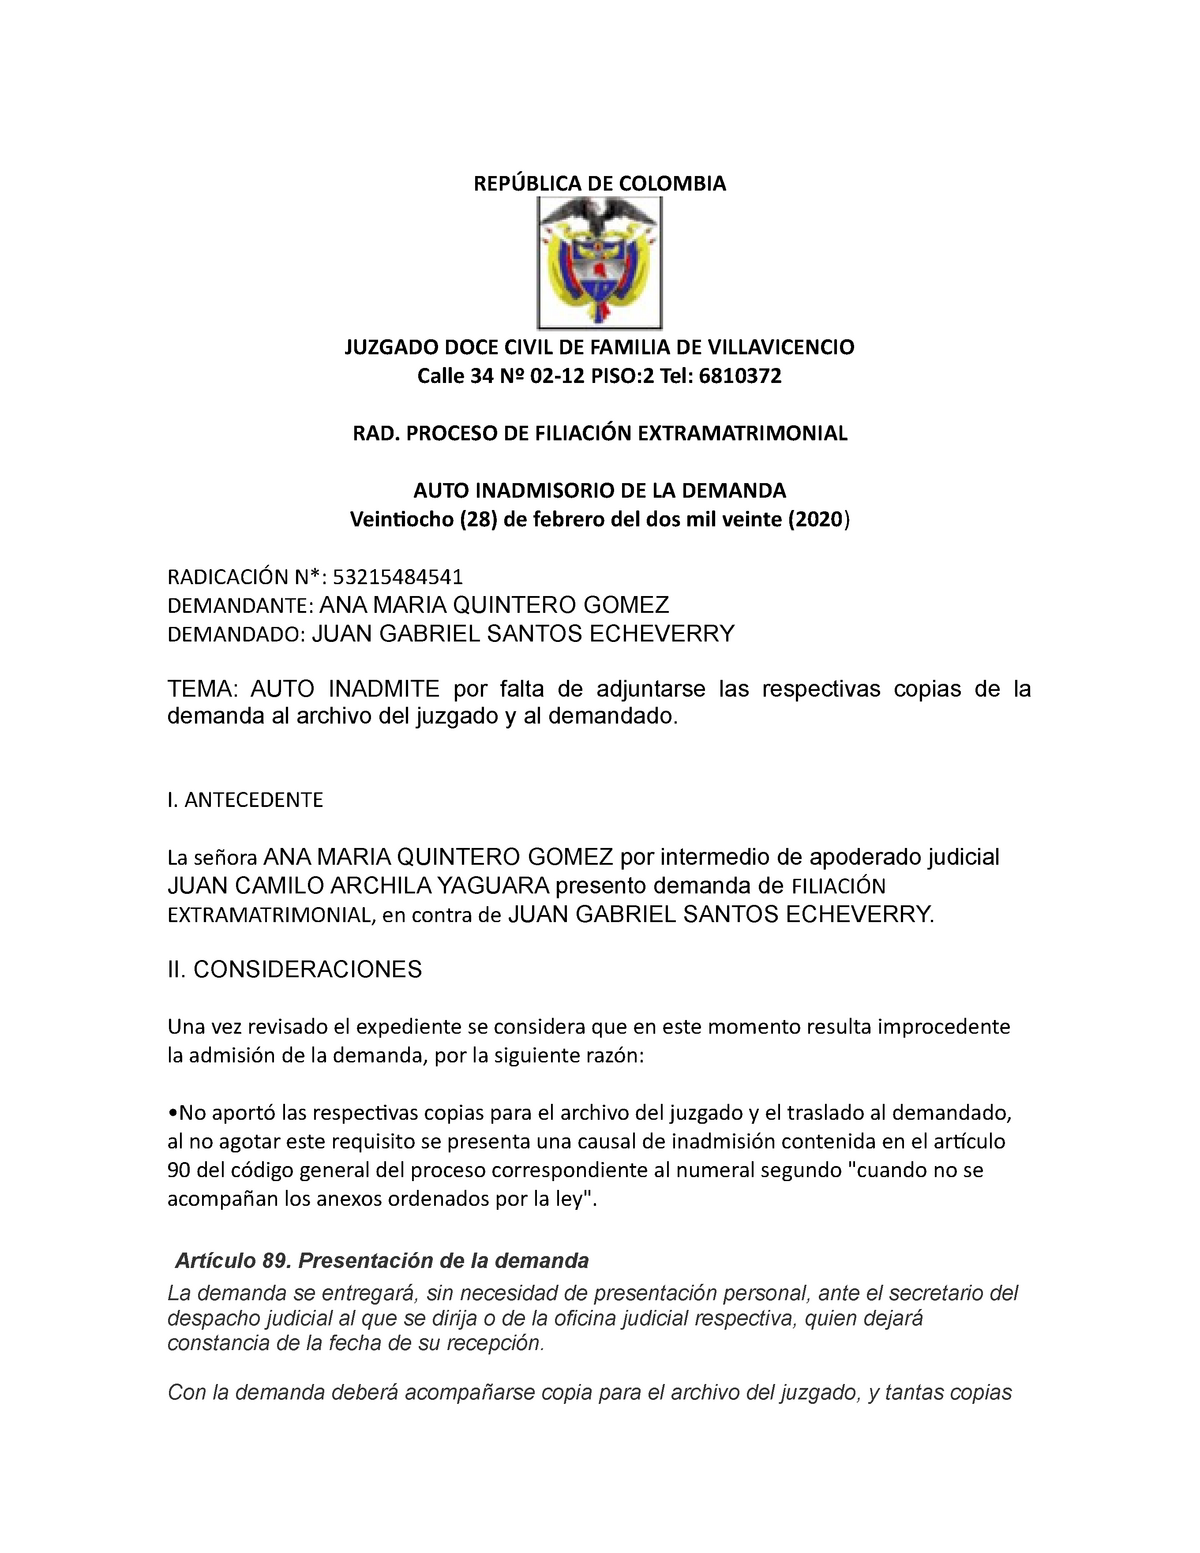 Auto inadmisorio - estructura auto admisorio - REPÚBLICA DE COLOMBIA  JUZGADO DOCE CIVIL DE FAMILIA - Studocu